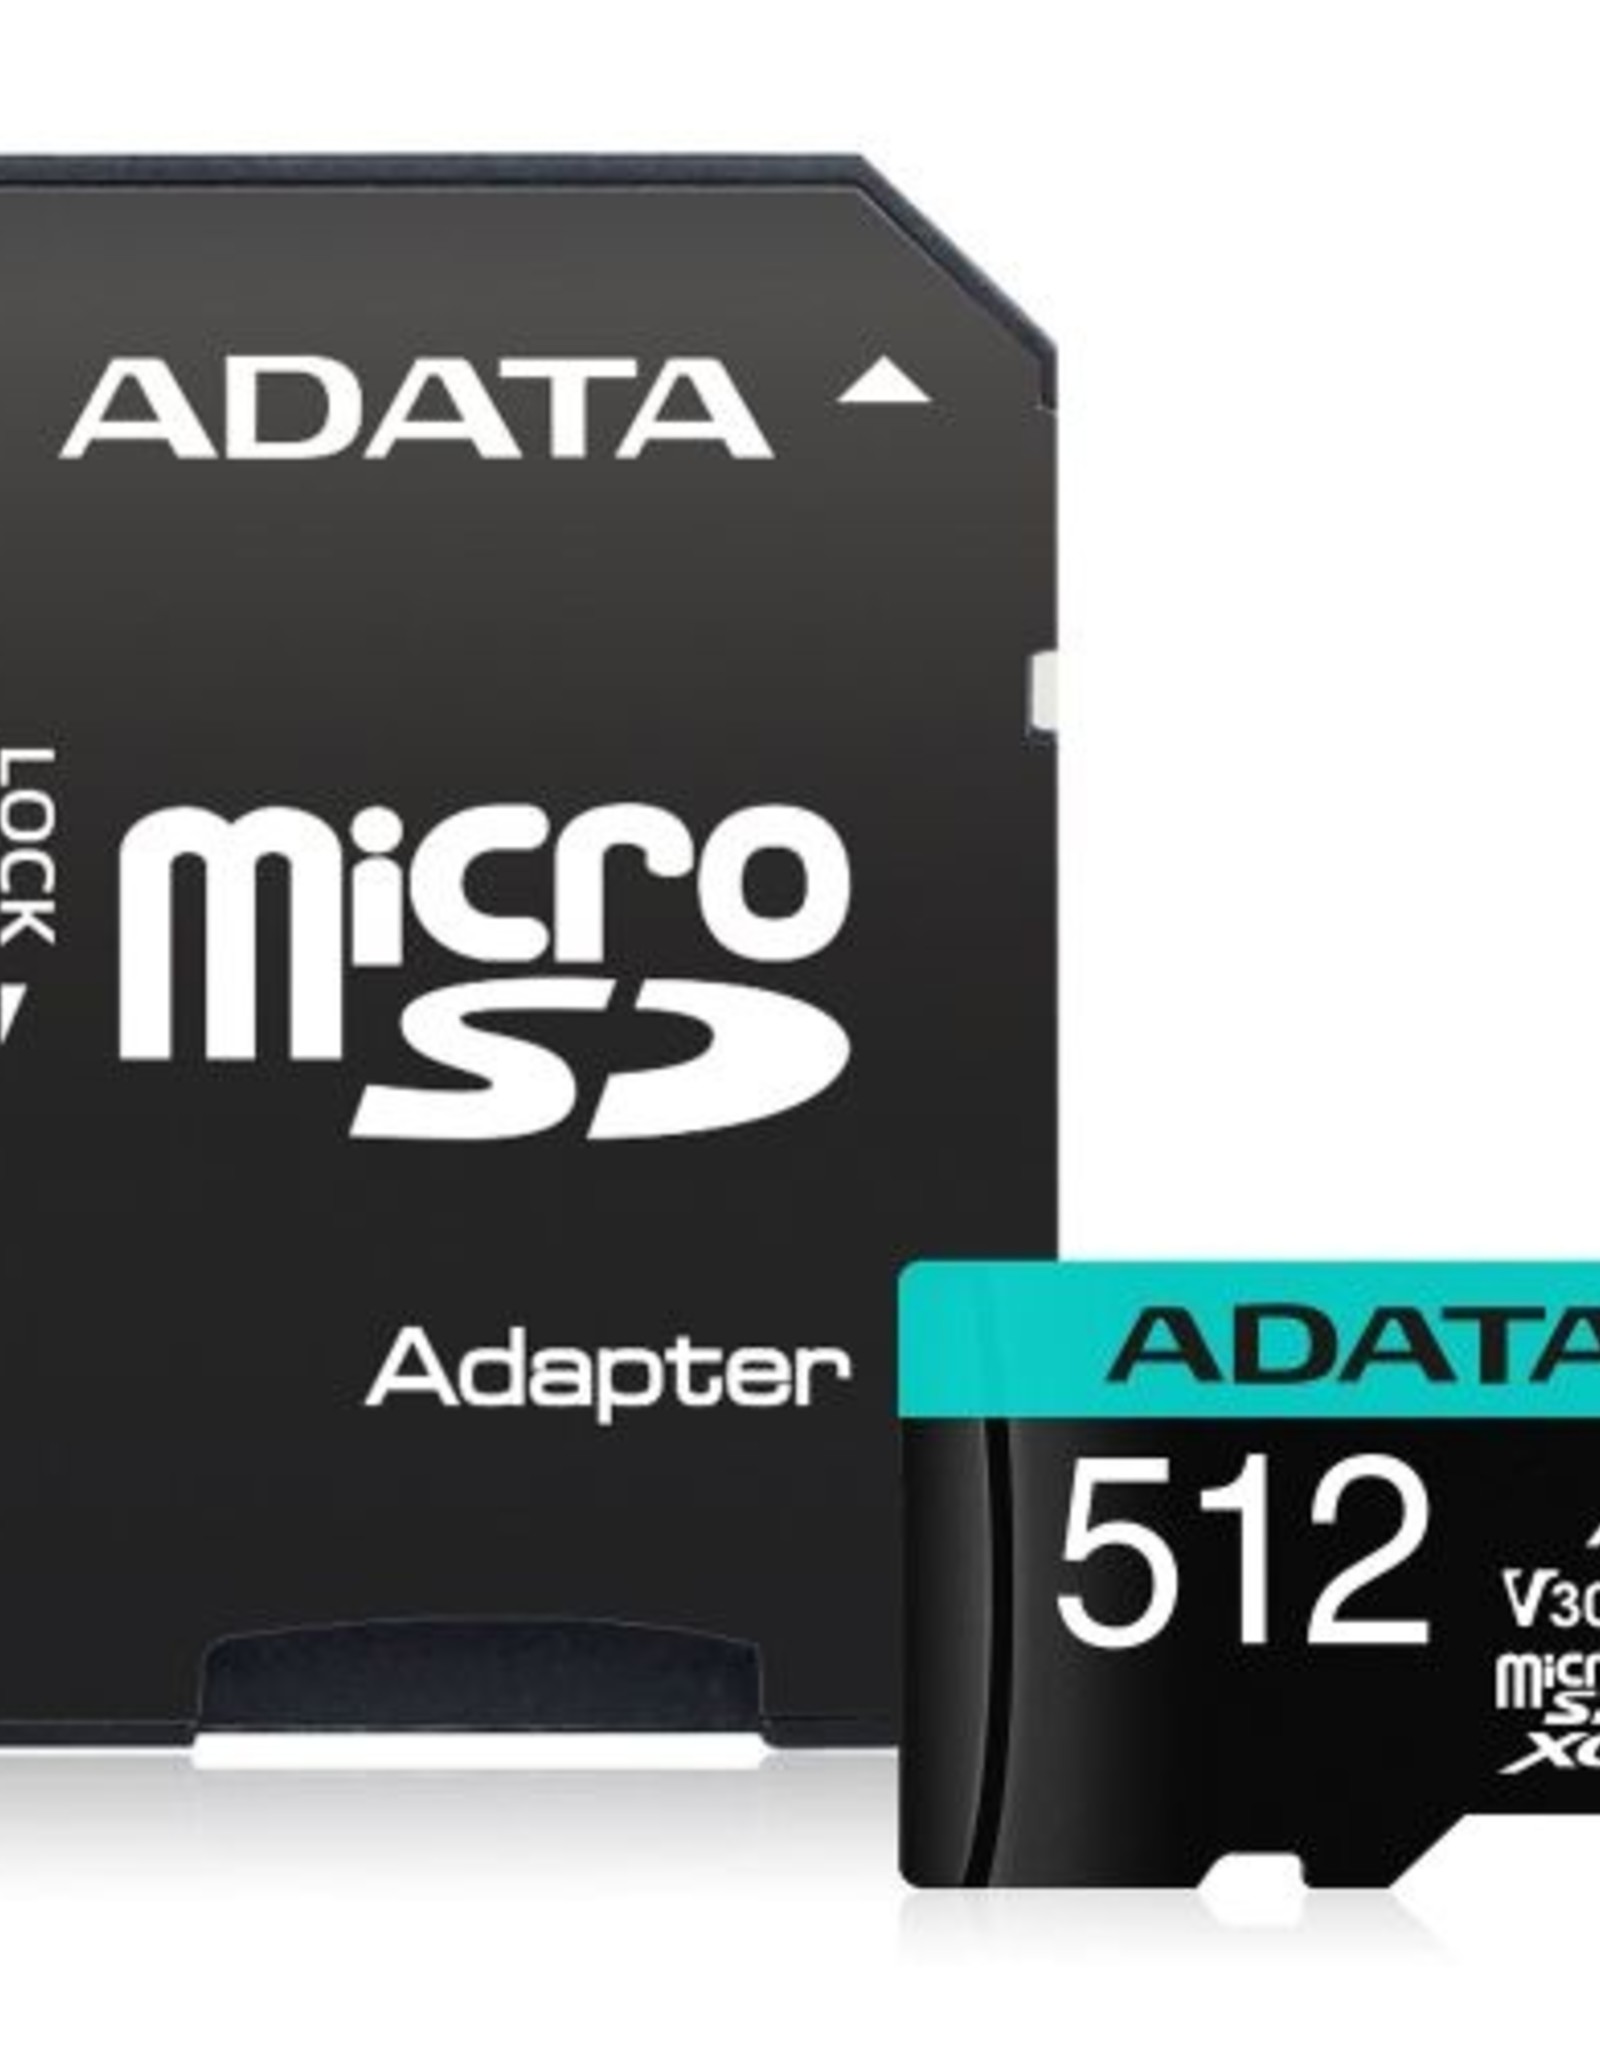 ADATA ADATA 512GB HIGH CAPACITY UHS-I U3 CLASS10-A2 (V30S) MICRO SD CARD, R/W100/80MBS